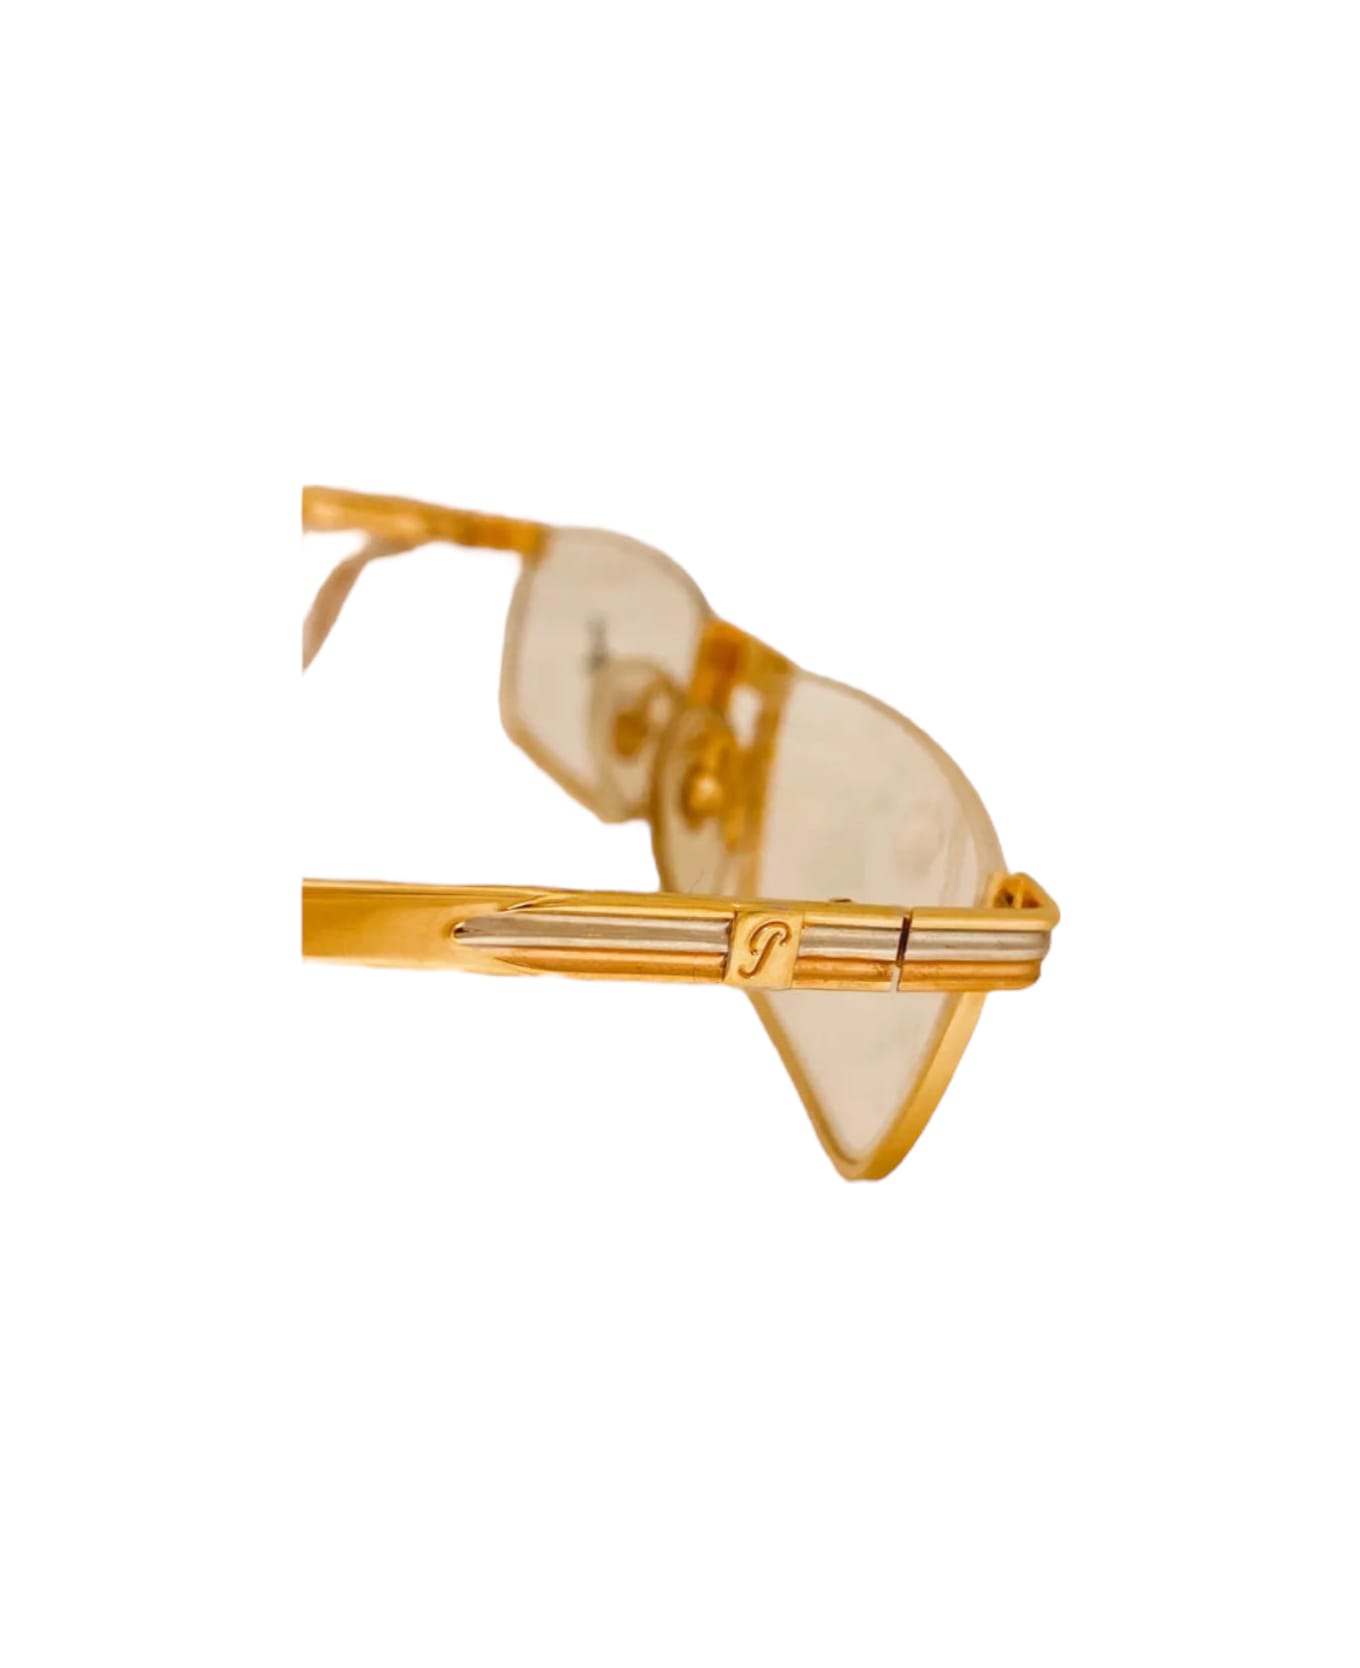 Persol Lancester - Gold Sunglasses サングラス